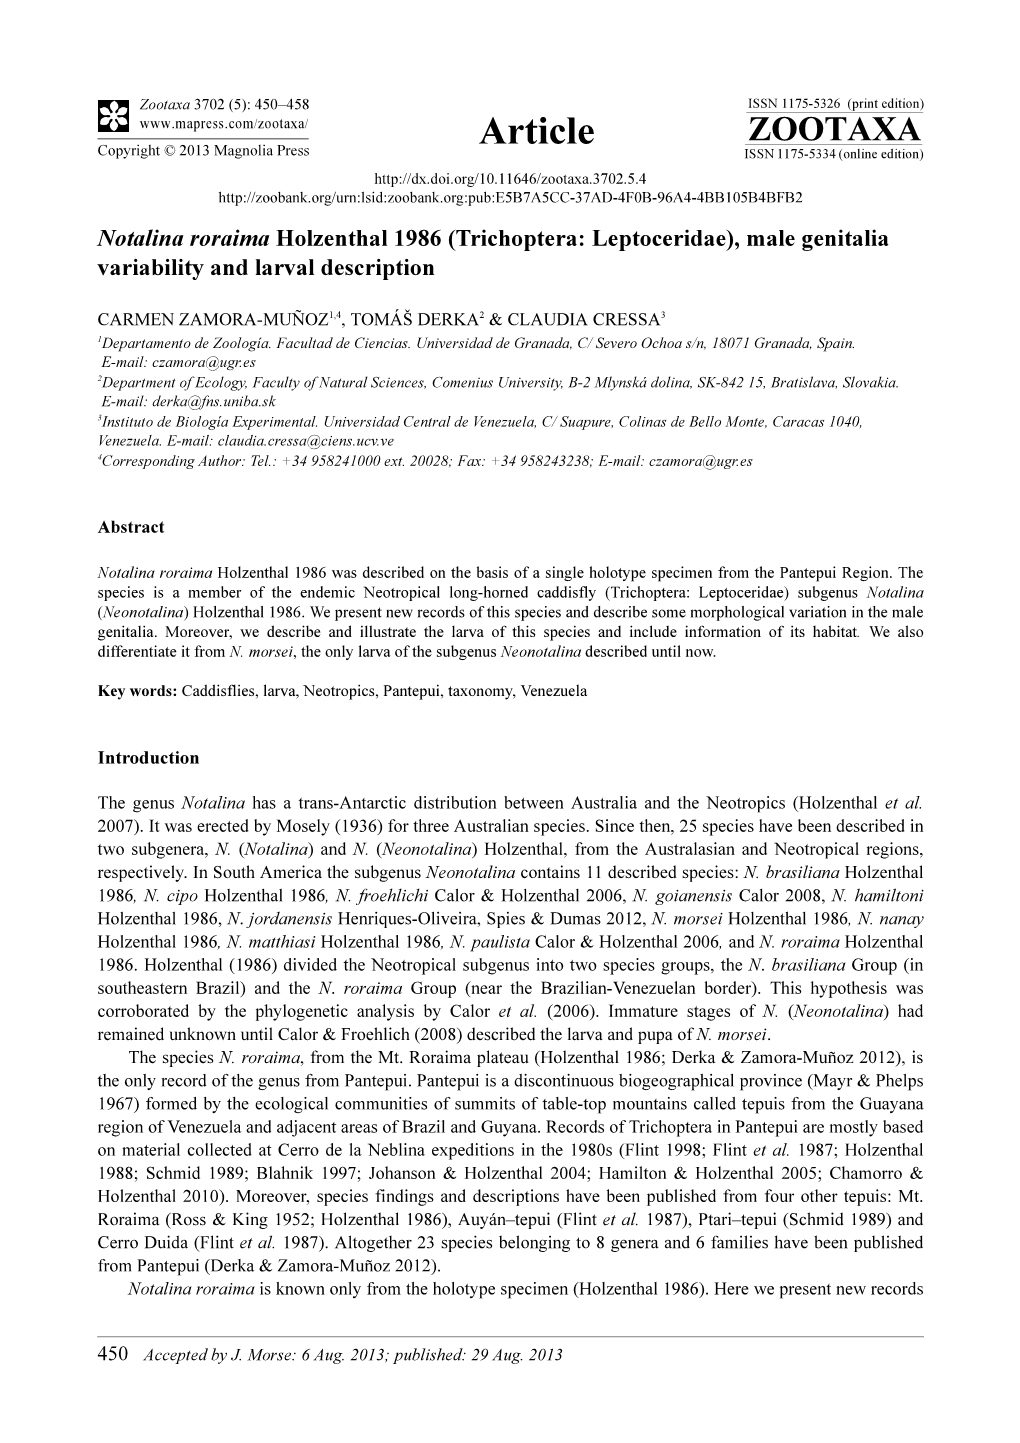 Notalina Roraima Holzenthal 1986 (Trichoptera: Leptoceridae), Male Genitalia Variability and Larval Description